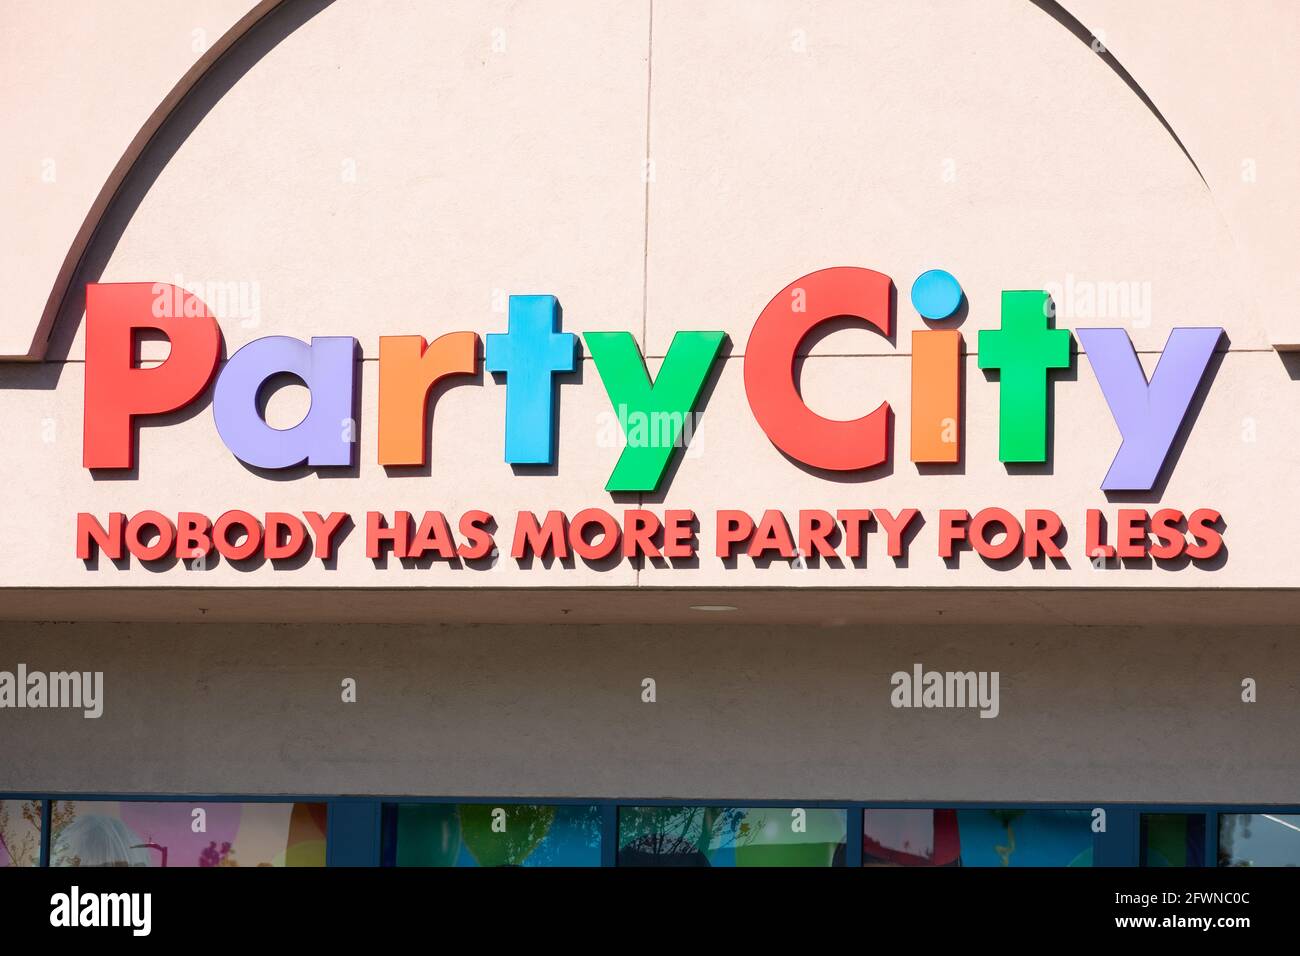 Party City retail chain store exterior. Nobody has more party for less slogan of facade. - Pleasanton, California, USA - 2020 Stock Photo